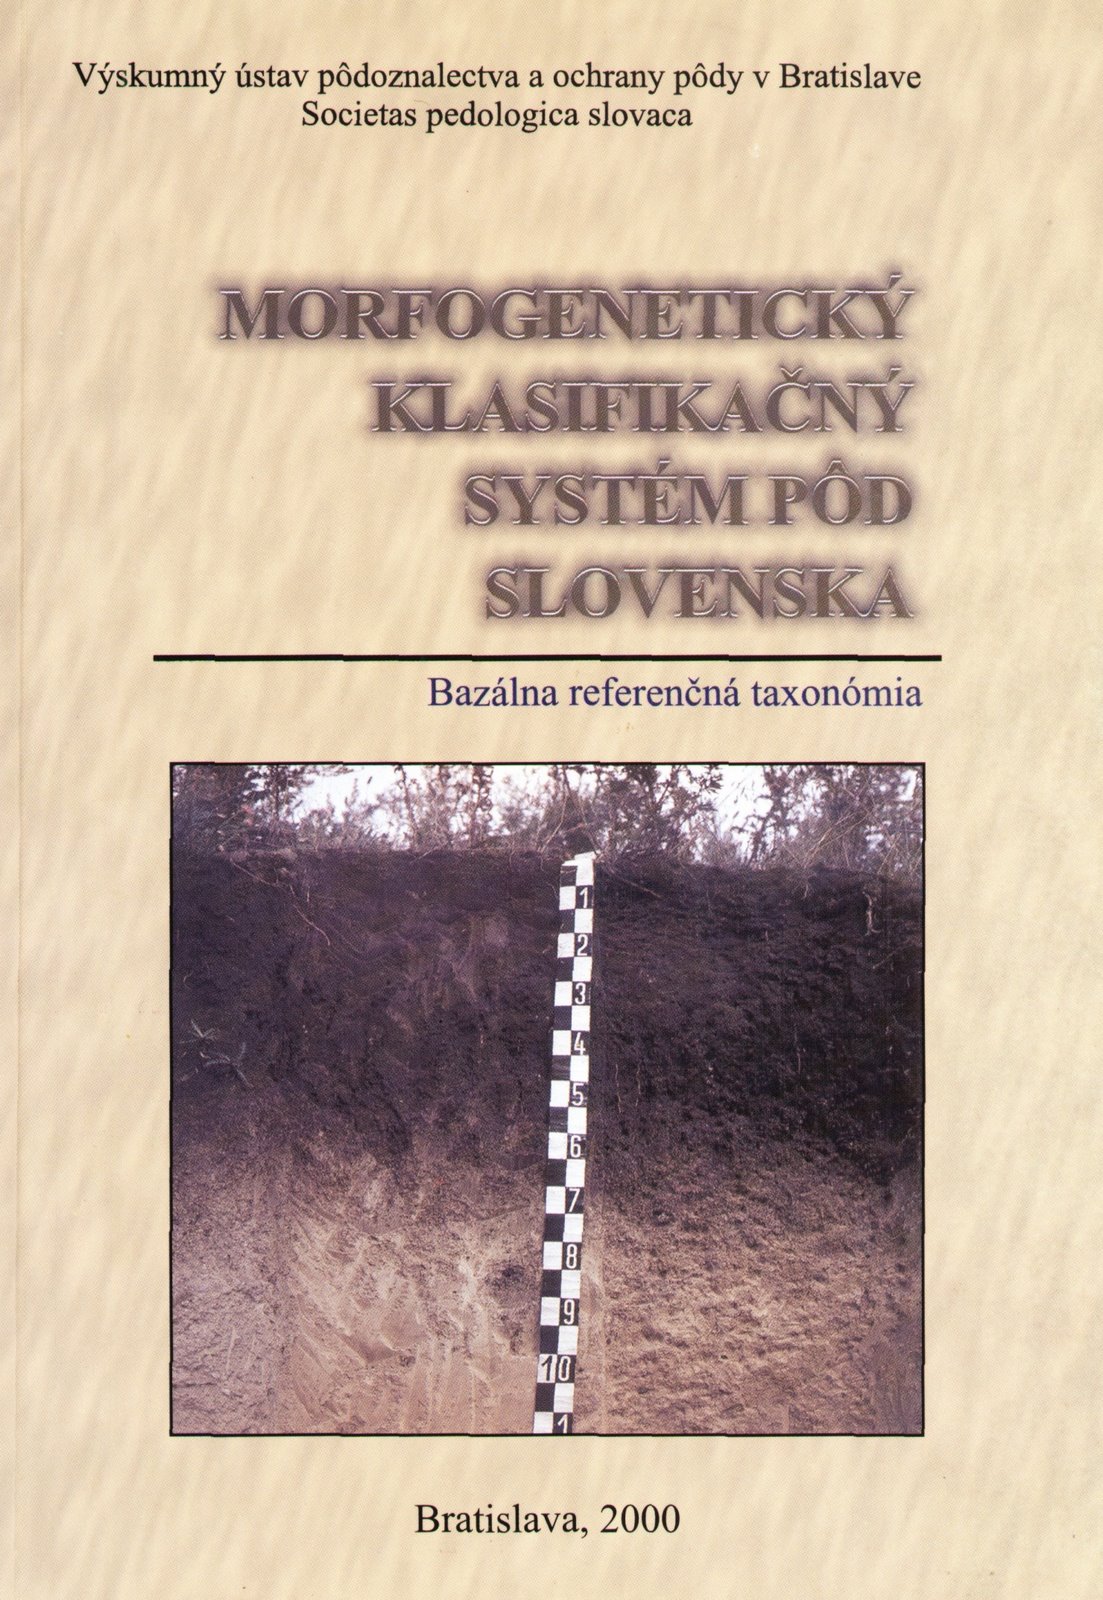 [Morfogeneticky_klasif_system.jpg]